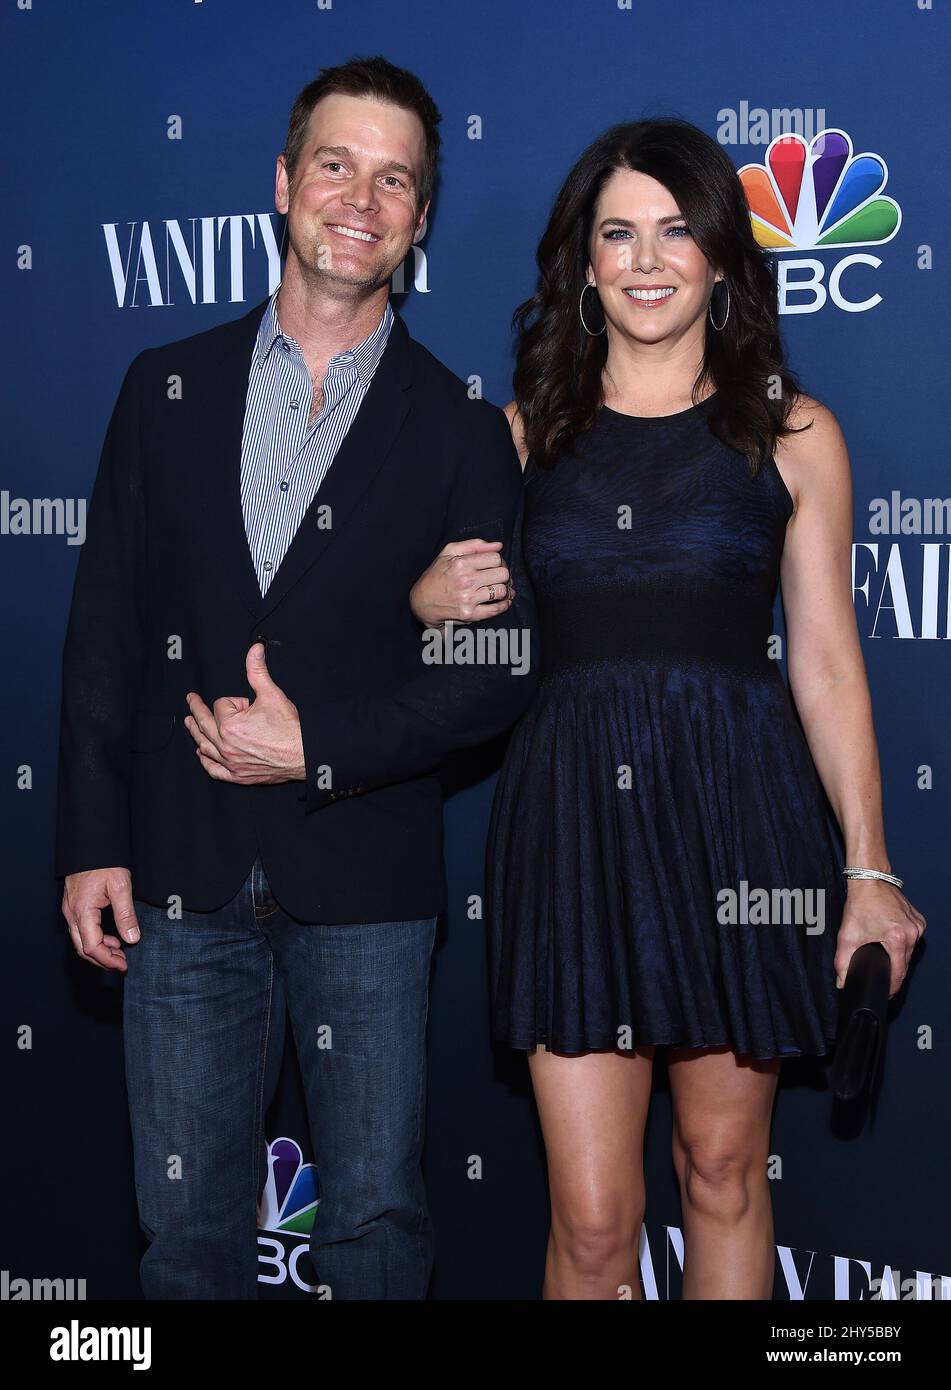 Peter Krause & Lauren Graham attending the NBC Vanity Fair 2014-2015 TV Season Red Carpet Event at the Hyde Sunset Kitchen Stock Photo